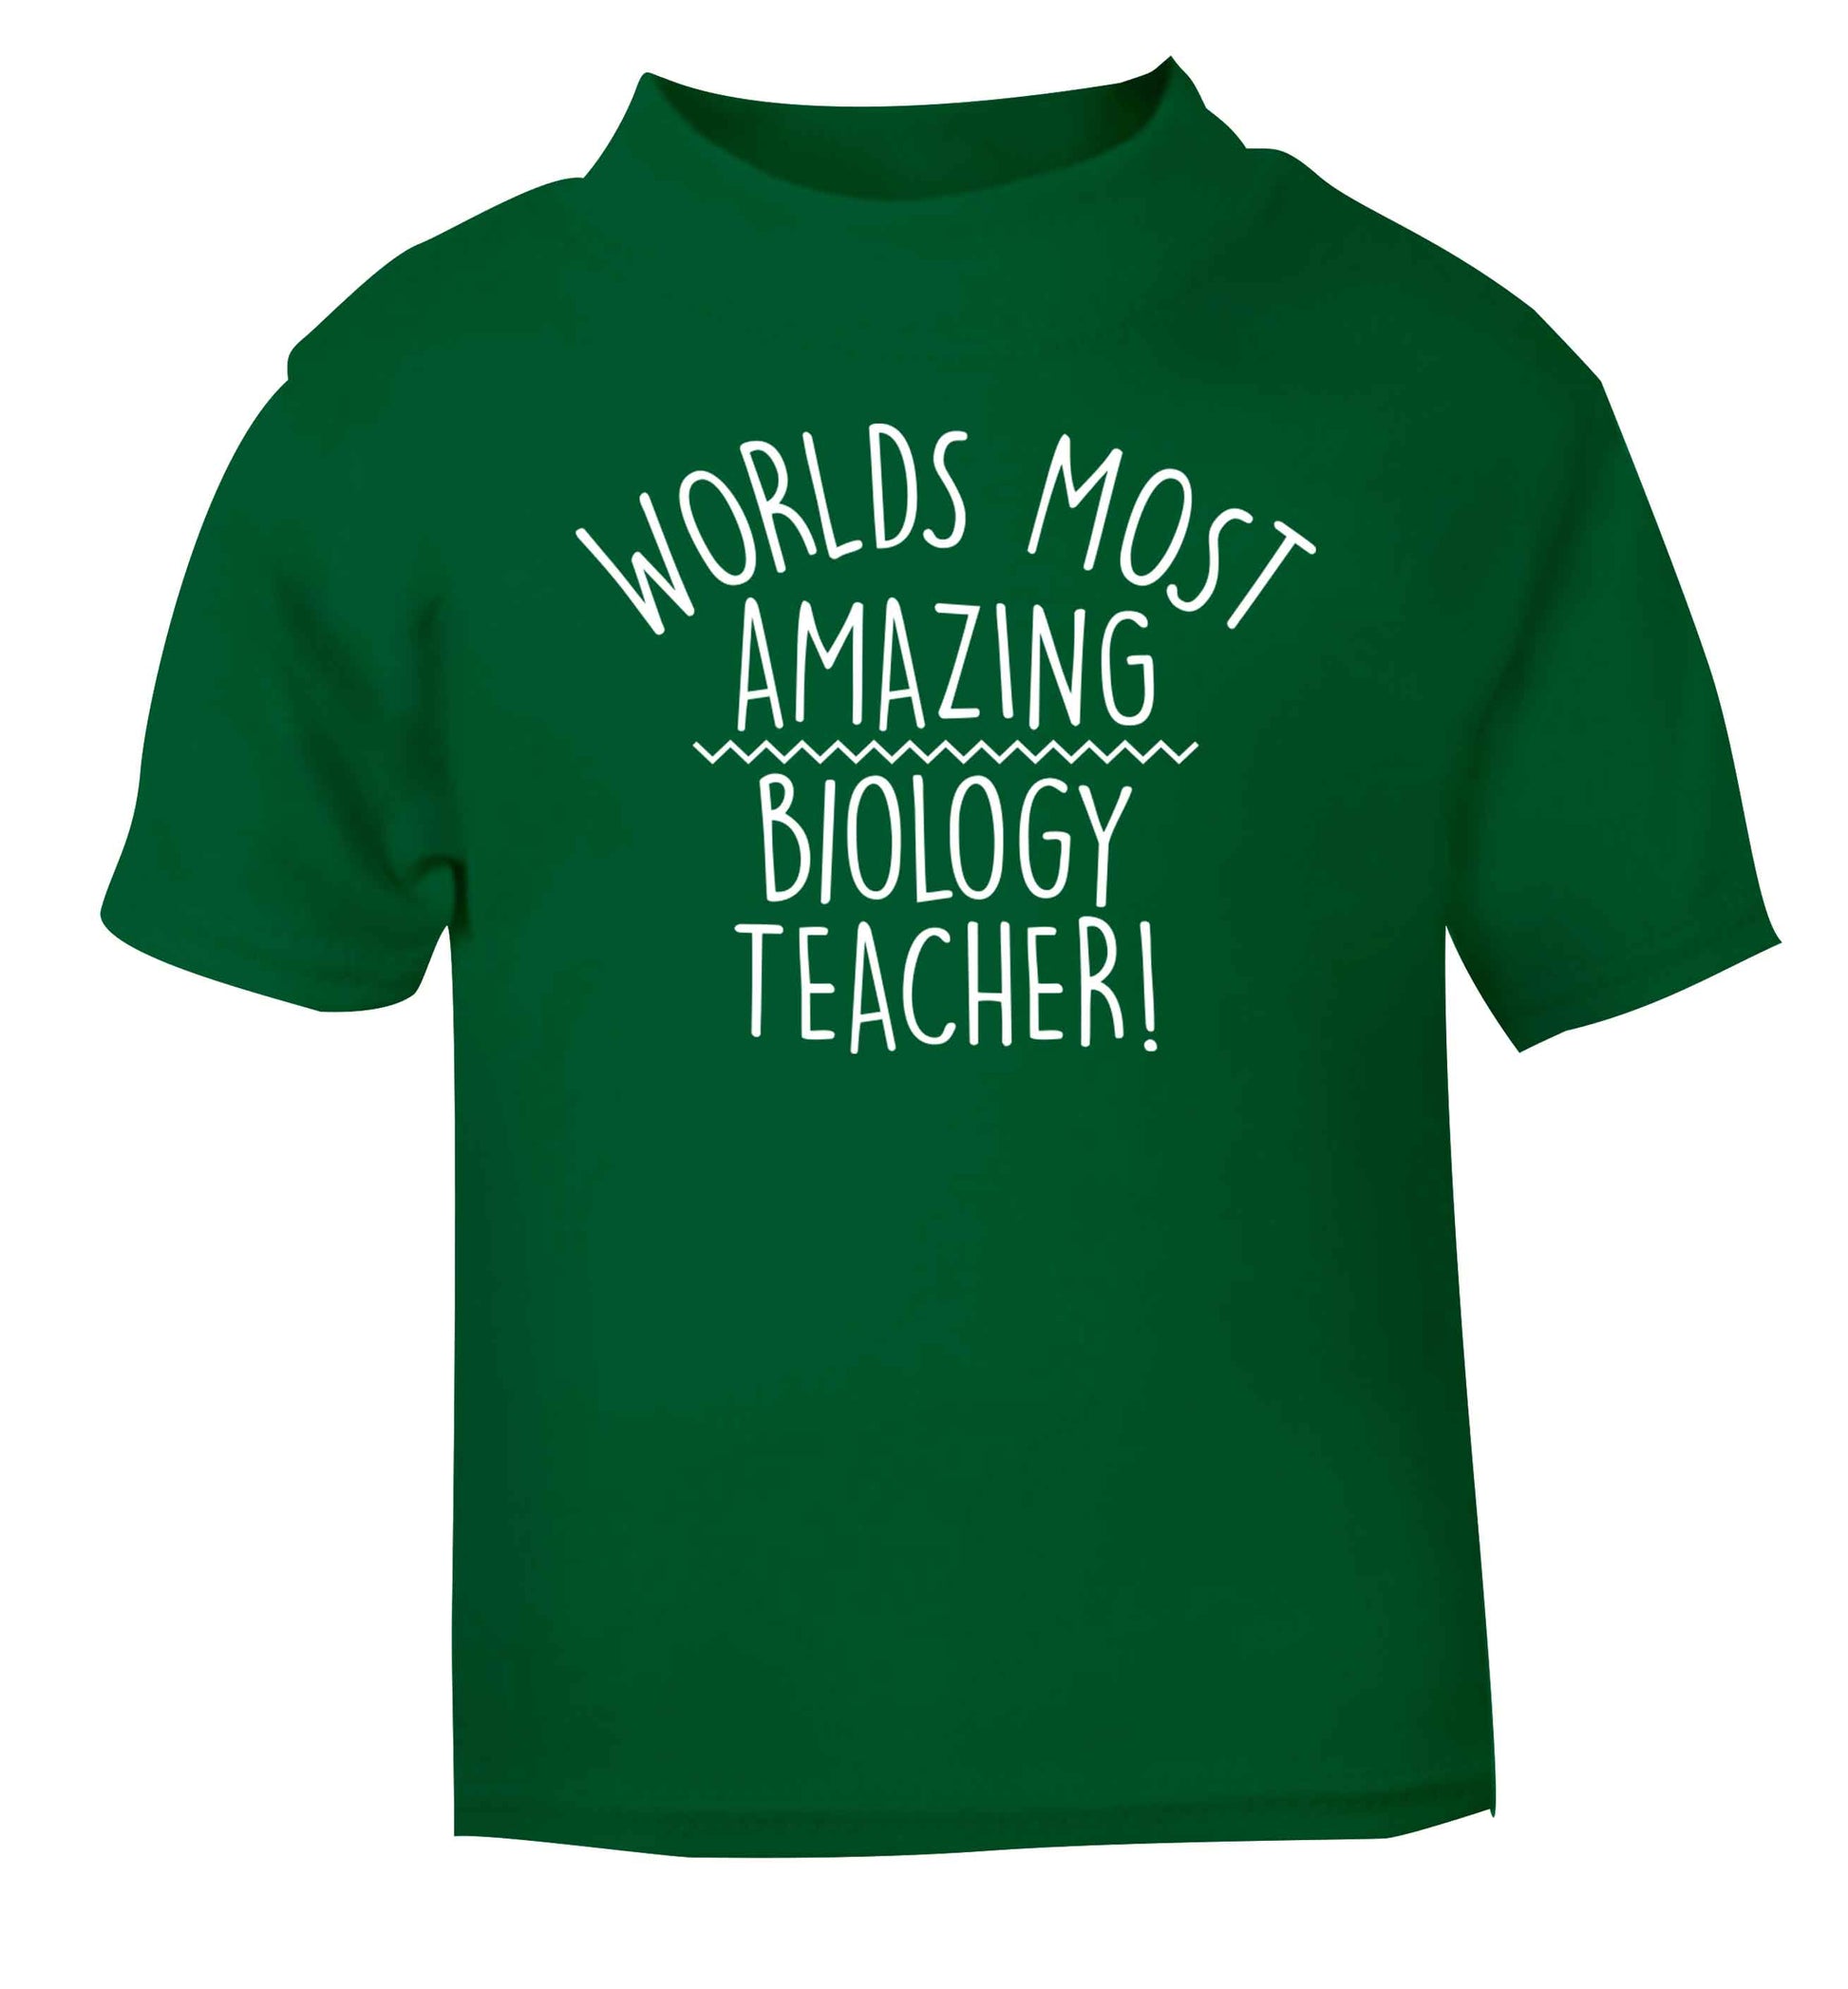 Worlds most amazing biology teacher green baby toddler Tshirt 2 Years